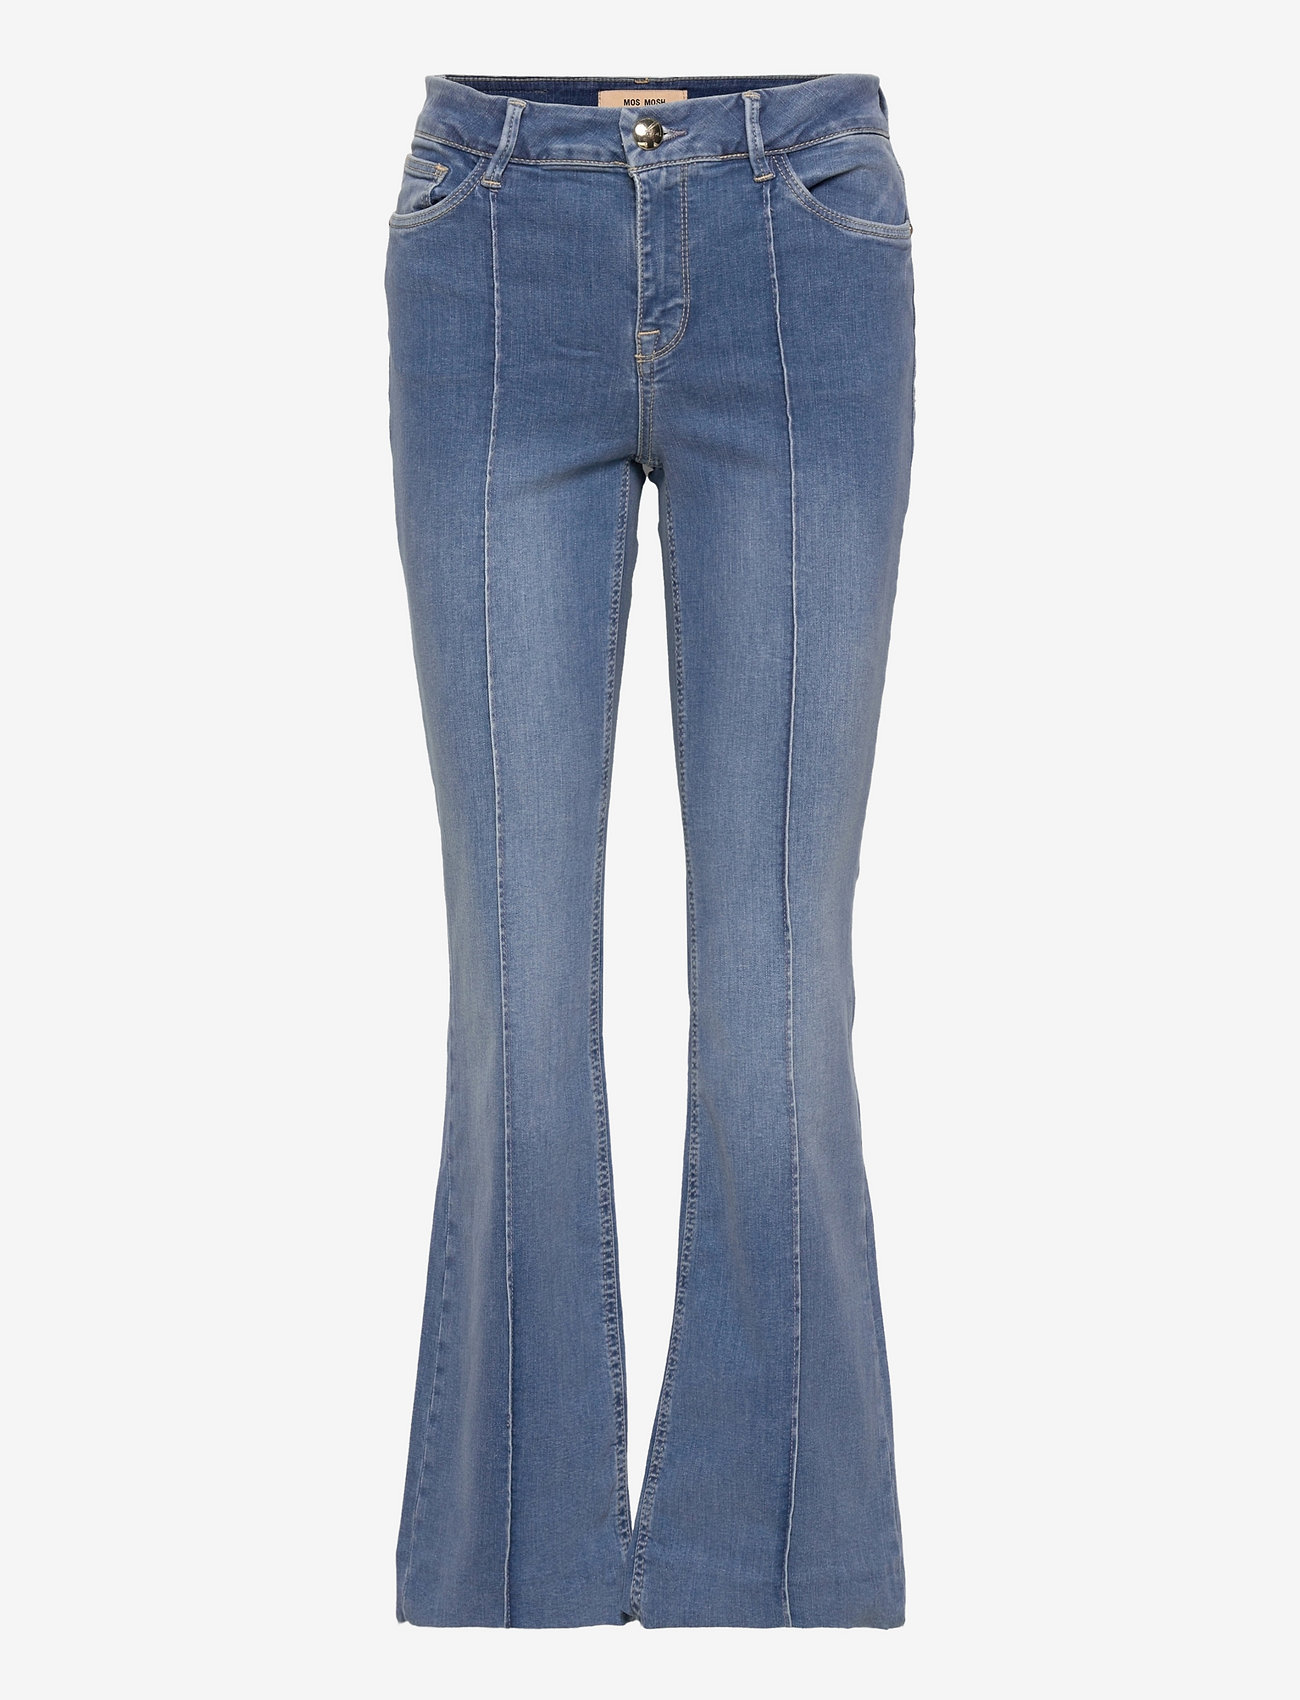 MOS MOSH Alli Sea Flare Jeans - Flared jeans | Boozt.com